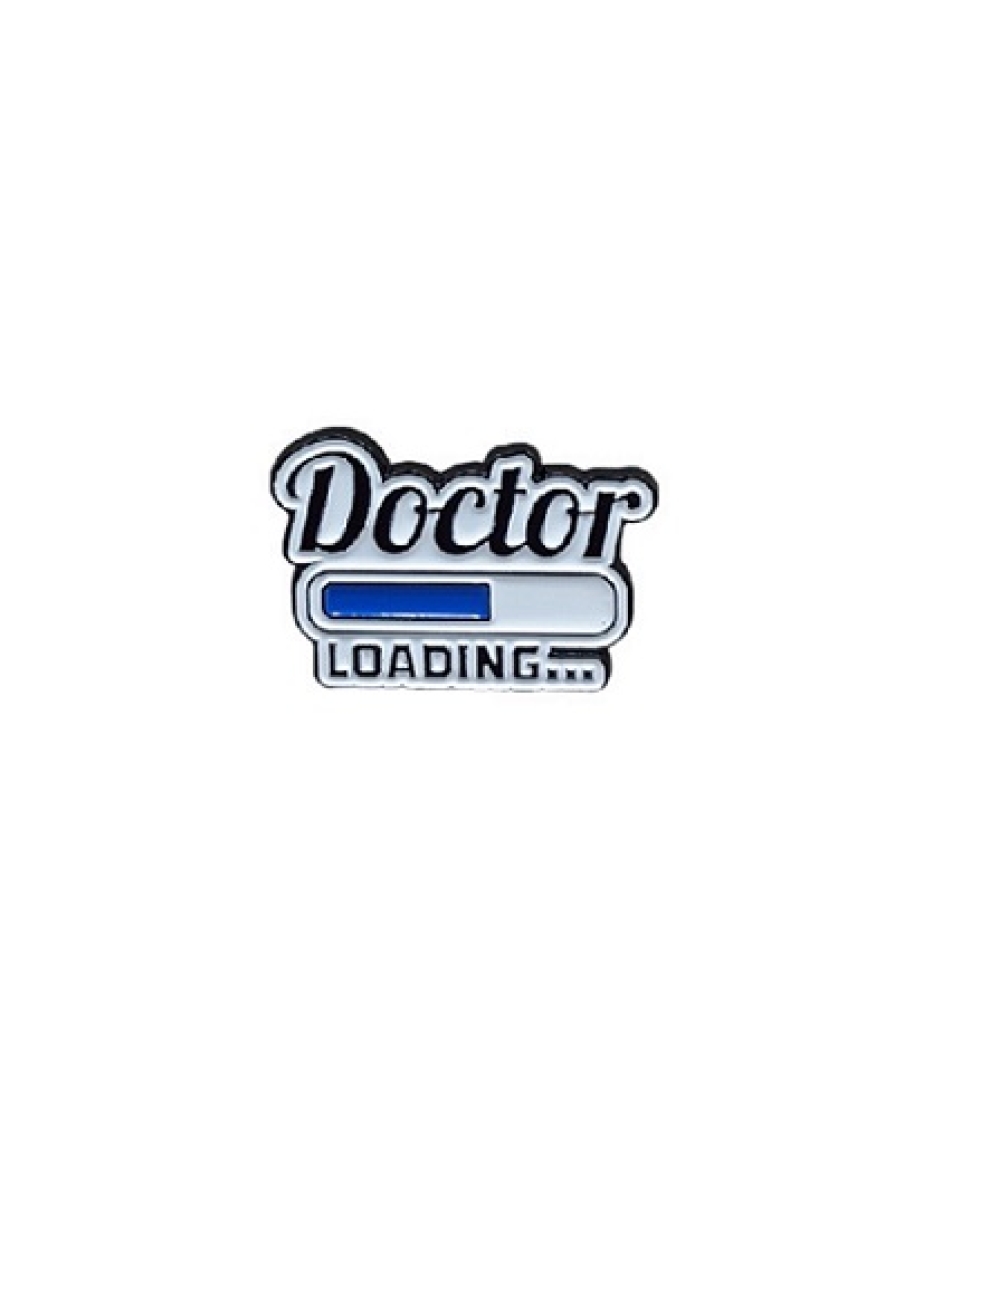 Doctor Loading...